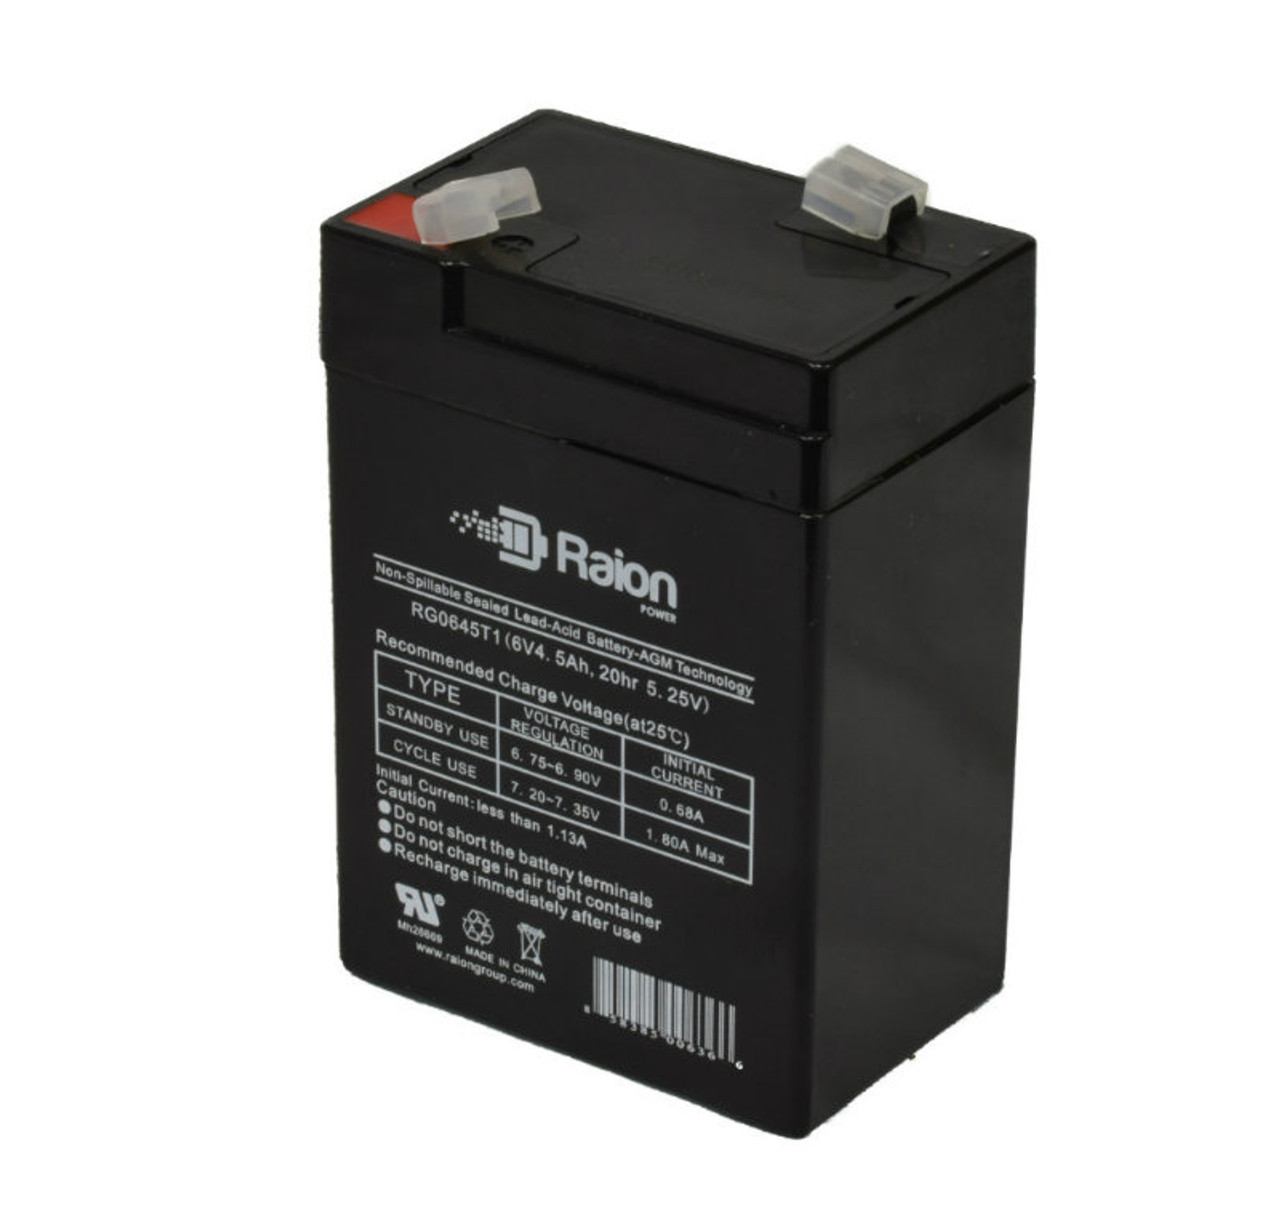 Raion Power RG0645T1 6V 4.5Ah Replacement Battery Cartridge for Douglas DG65F